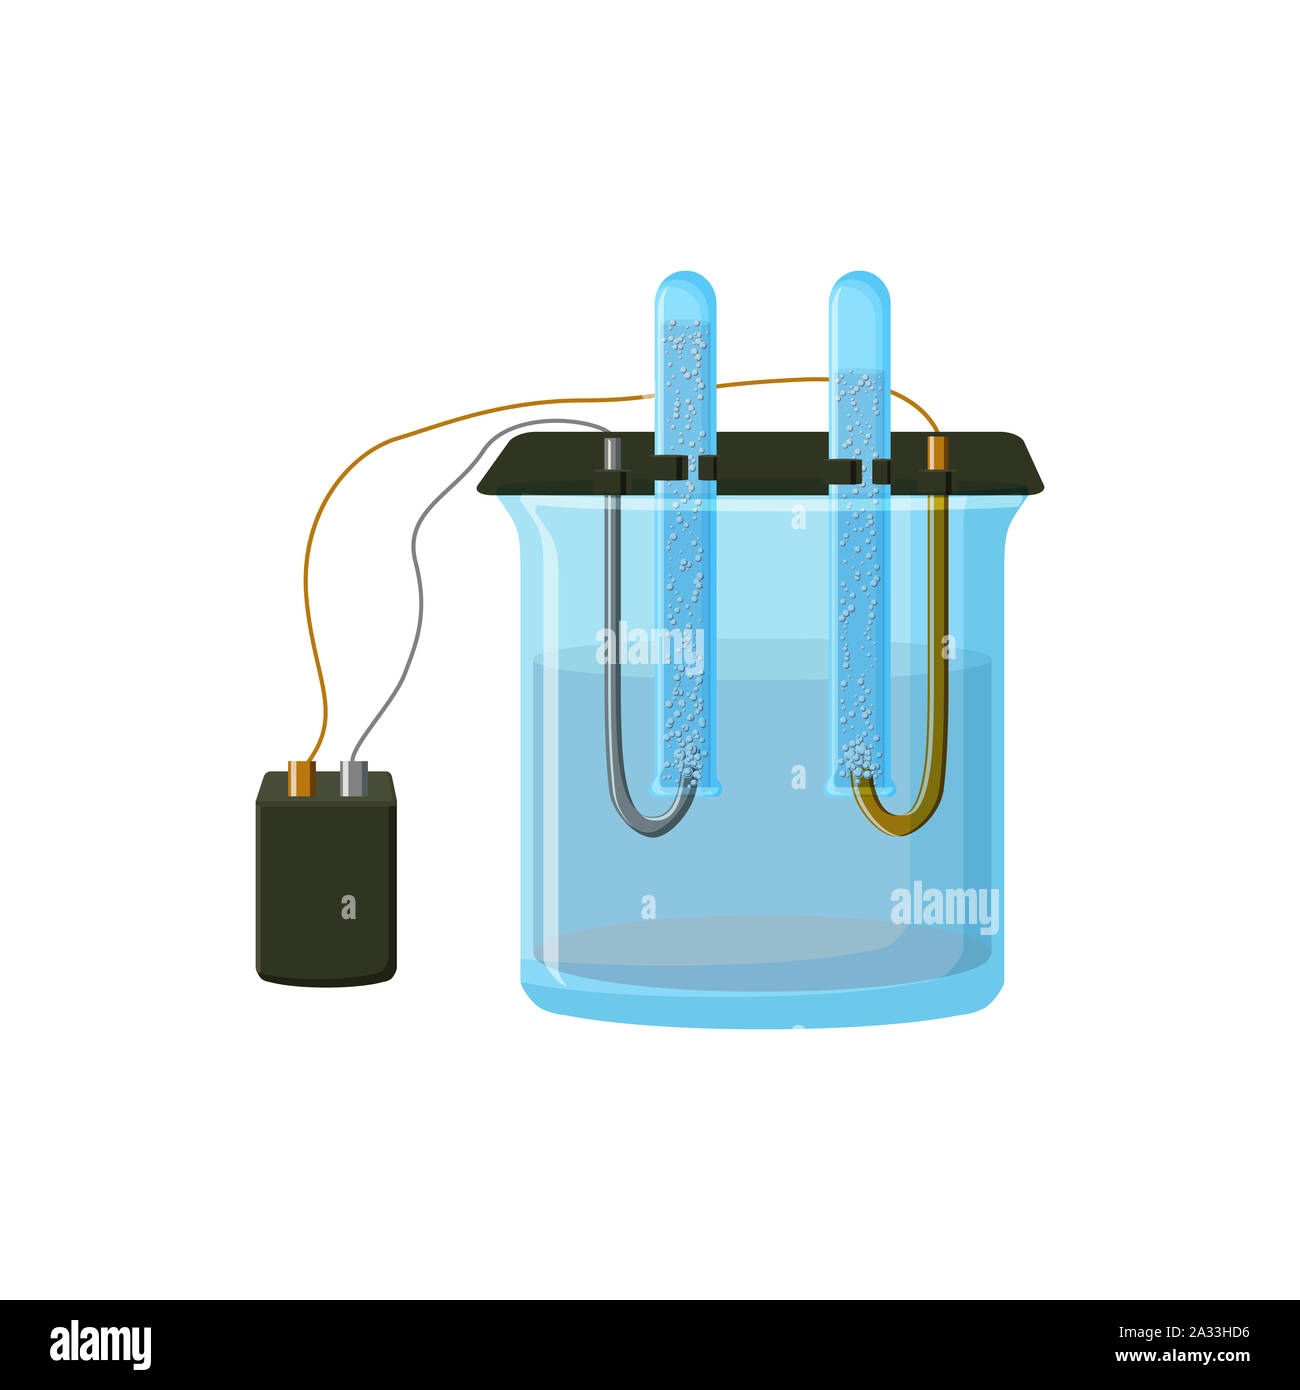 Water electrolysis, illustration Stock Photo